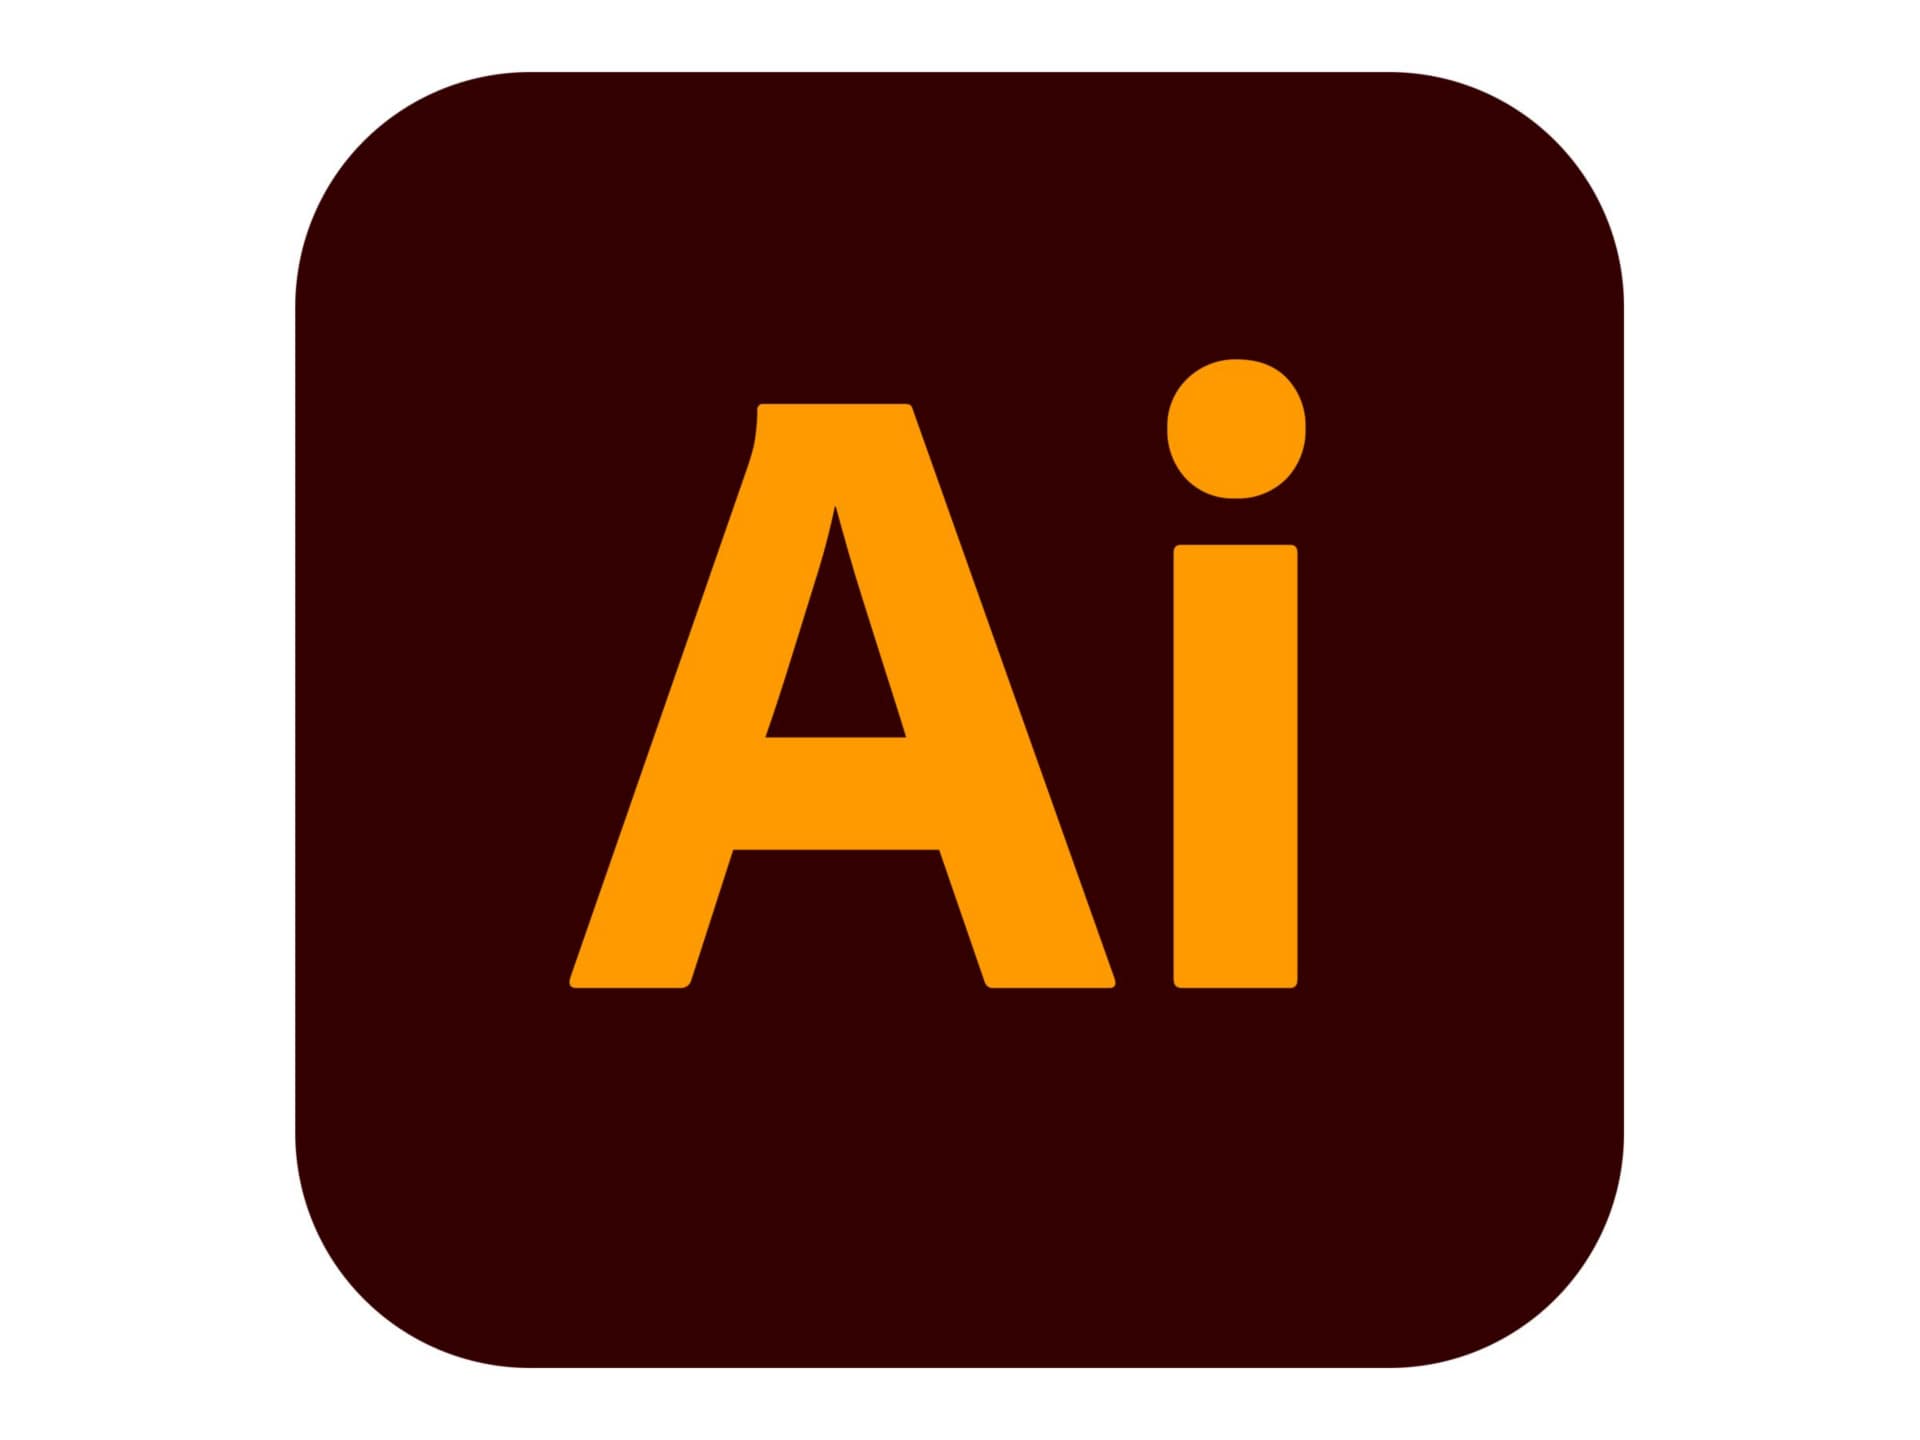 Adobe Illustrator CC for teams - Subscription New - 1 named user